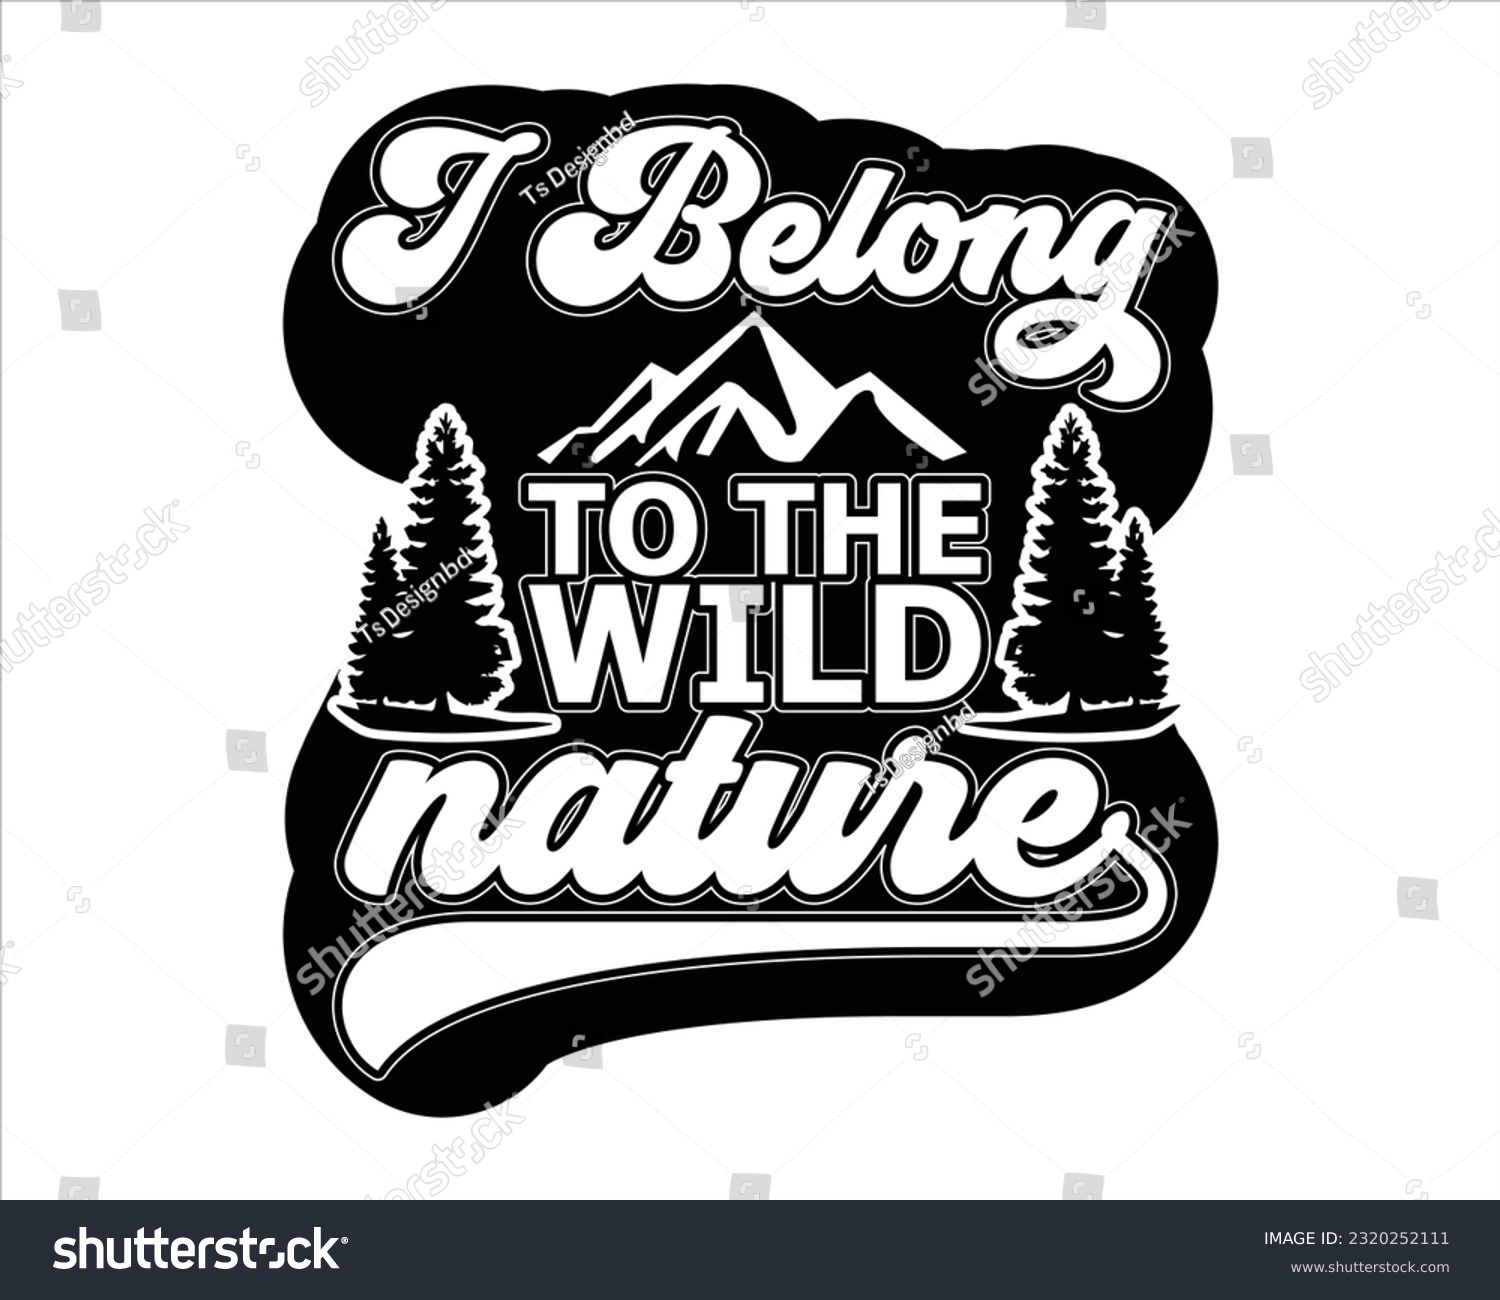 SVG of I Belong To The Wild Nature Svg Design, Hiking Svg Design, Mountain illustration, outdoor adventure ,Outdoor Adventure Inspiring Motivation Quote, camping, hiking svg